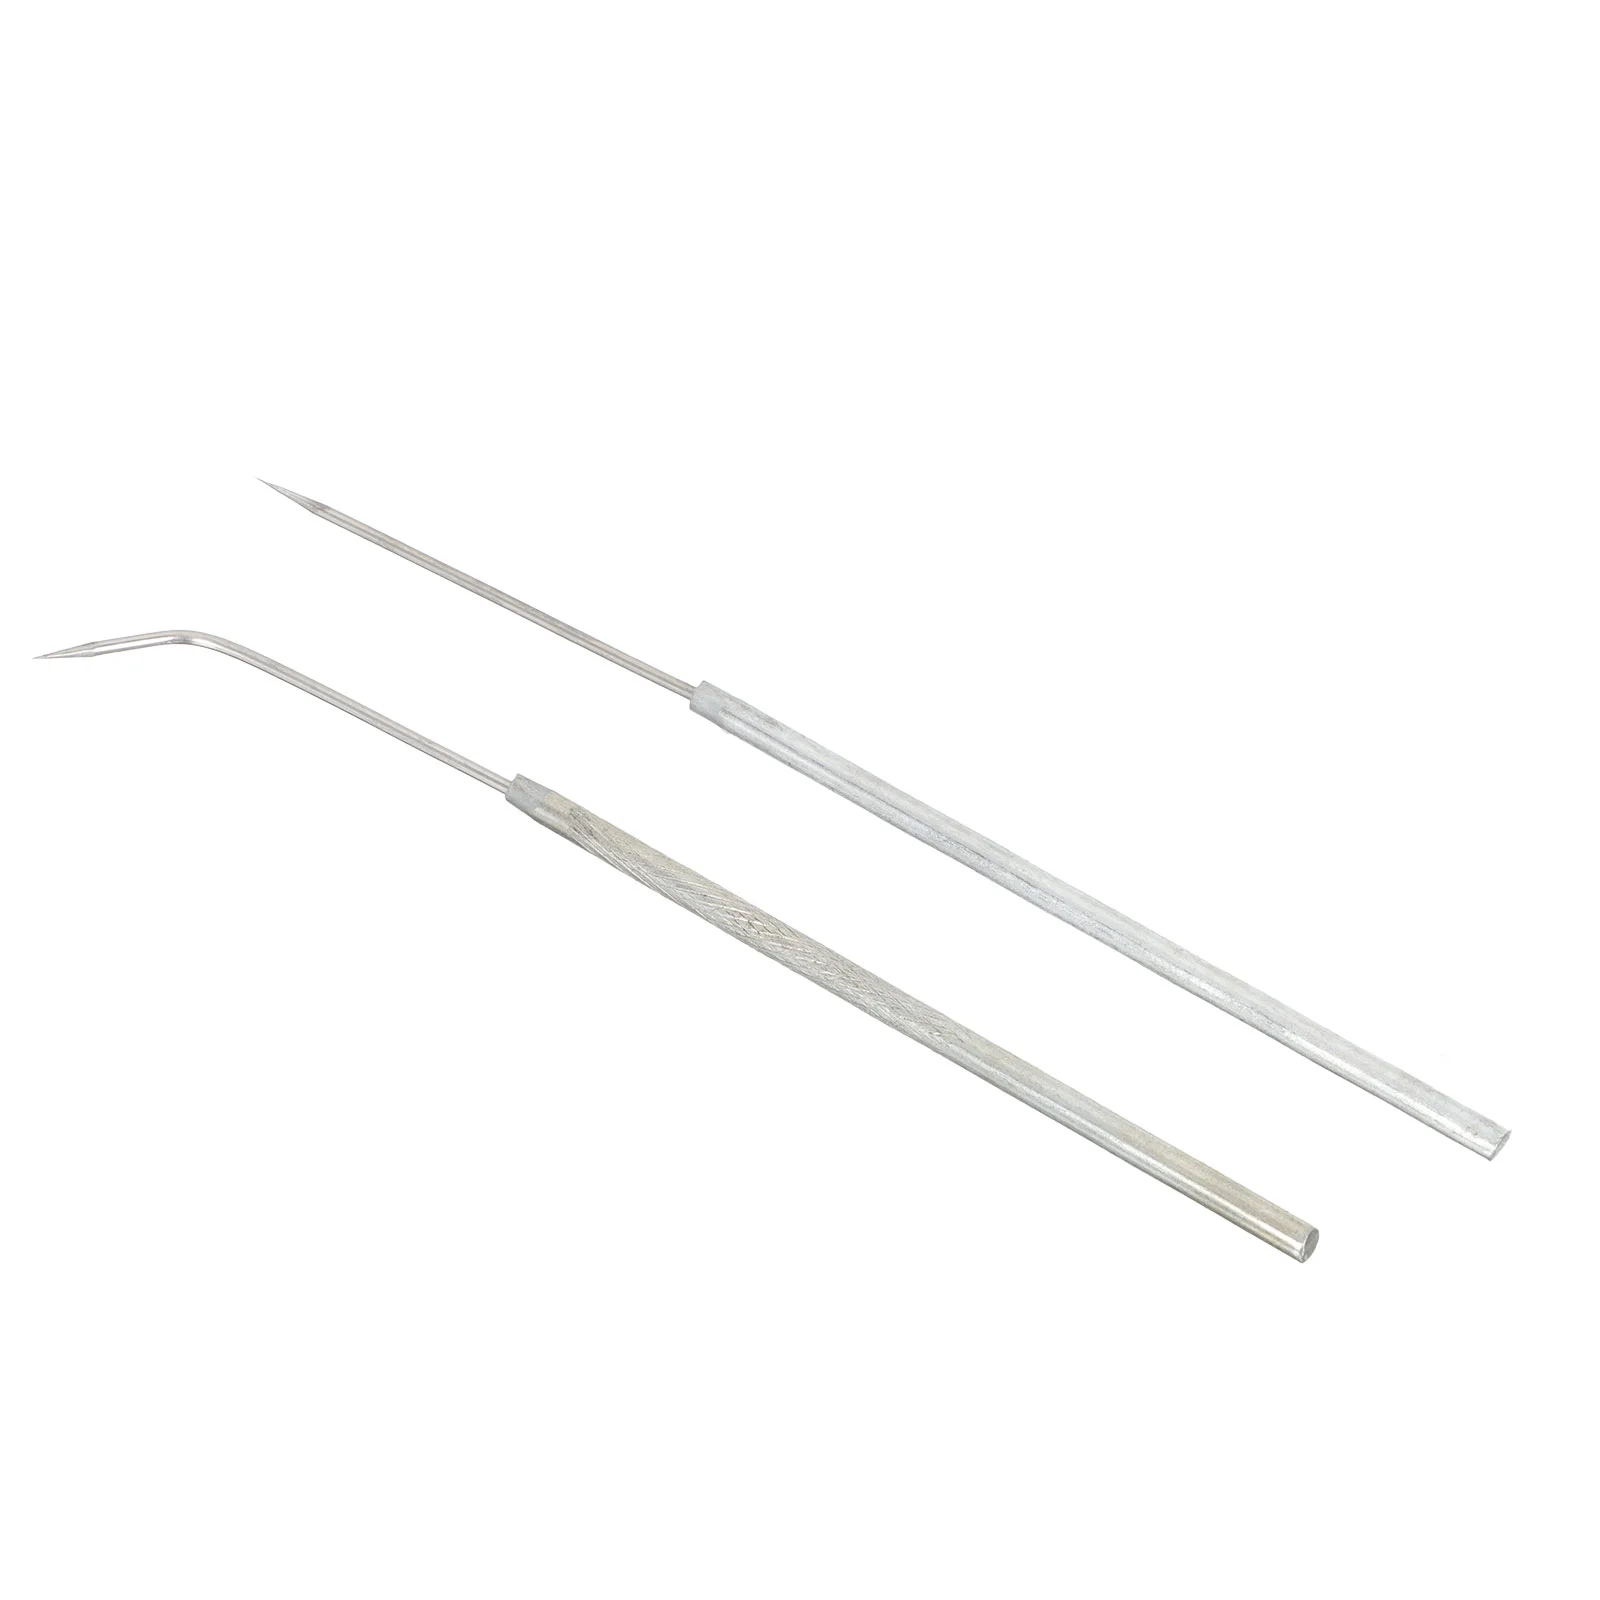 

2 Pcs Pro Tools Shaped Needle Biology Laboratory Anatomical Equipment Straight Metal Inoculating Tool Reusable Needles